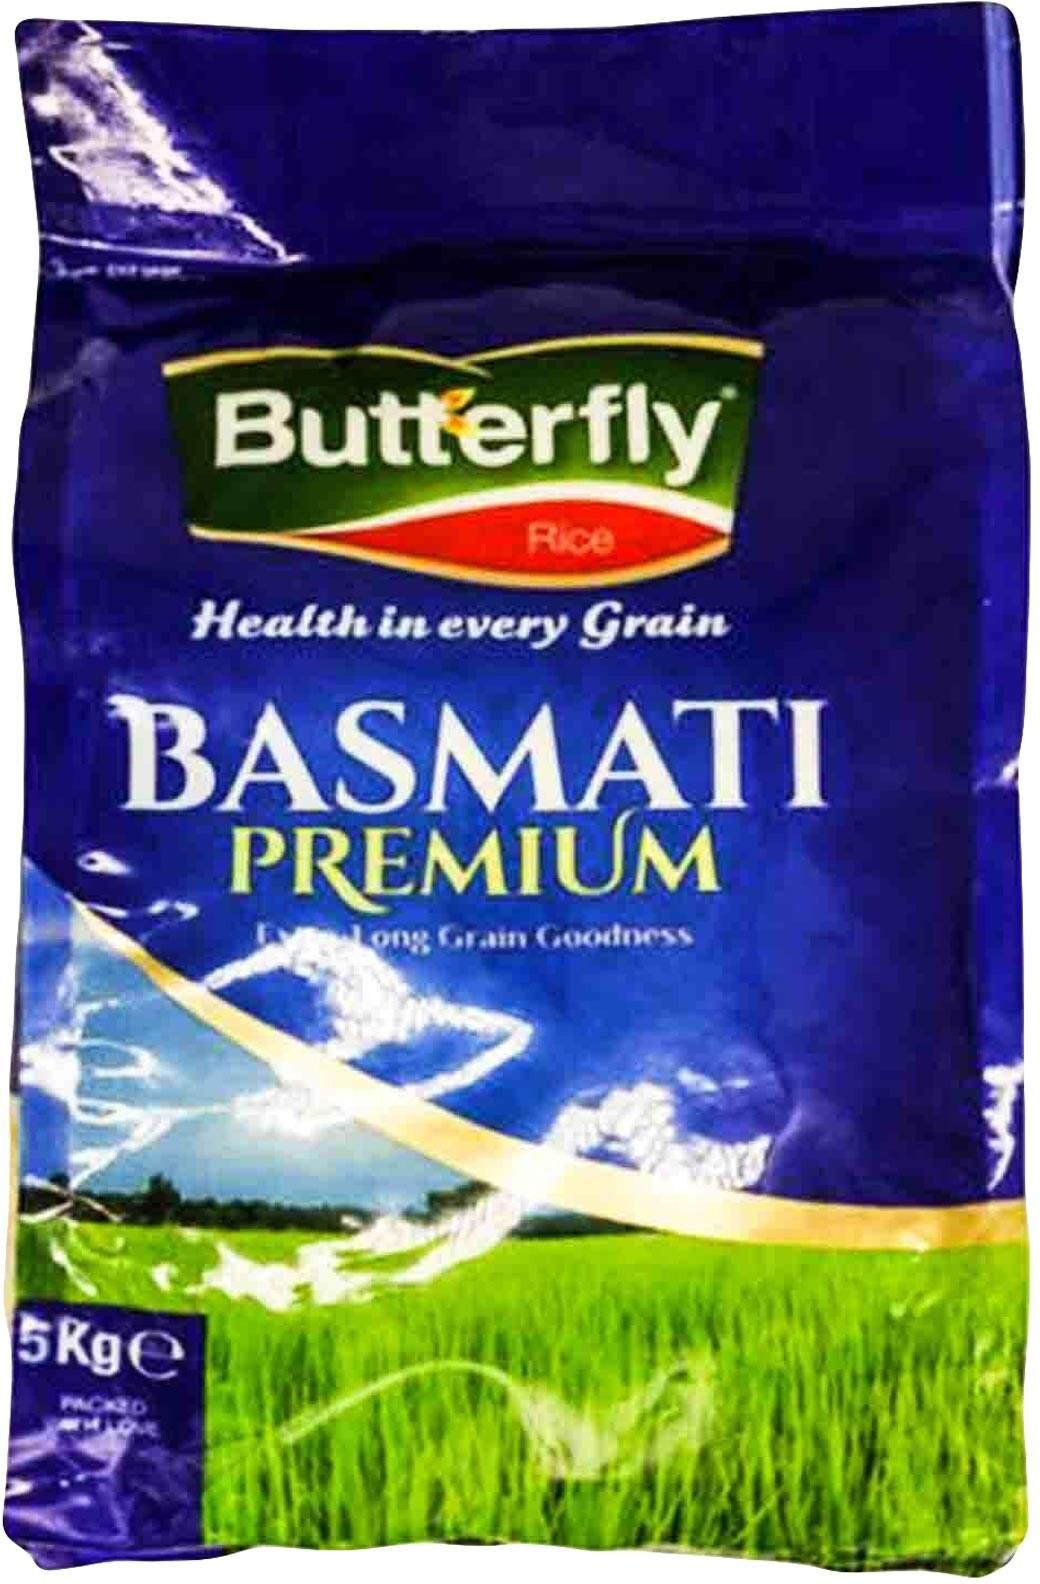 Butterfly Premium Basmati Rice 5Kg